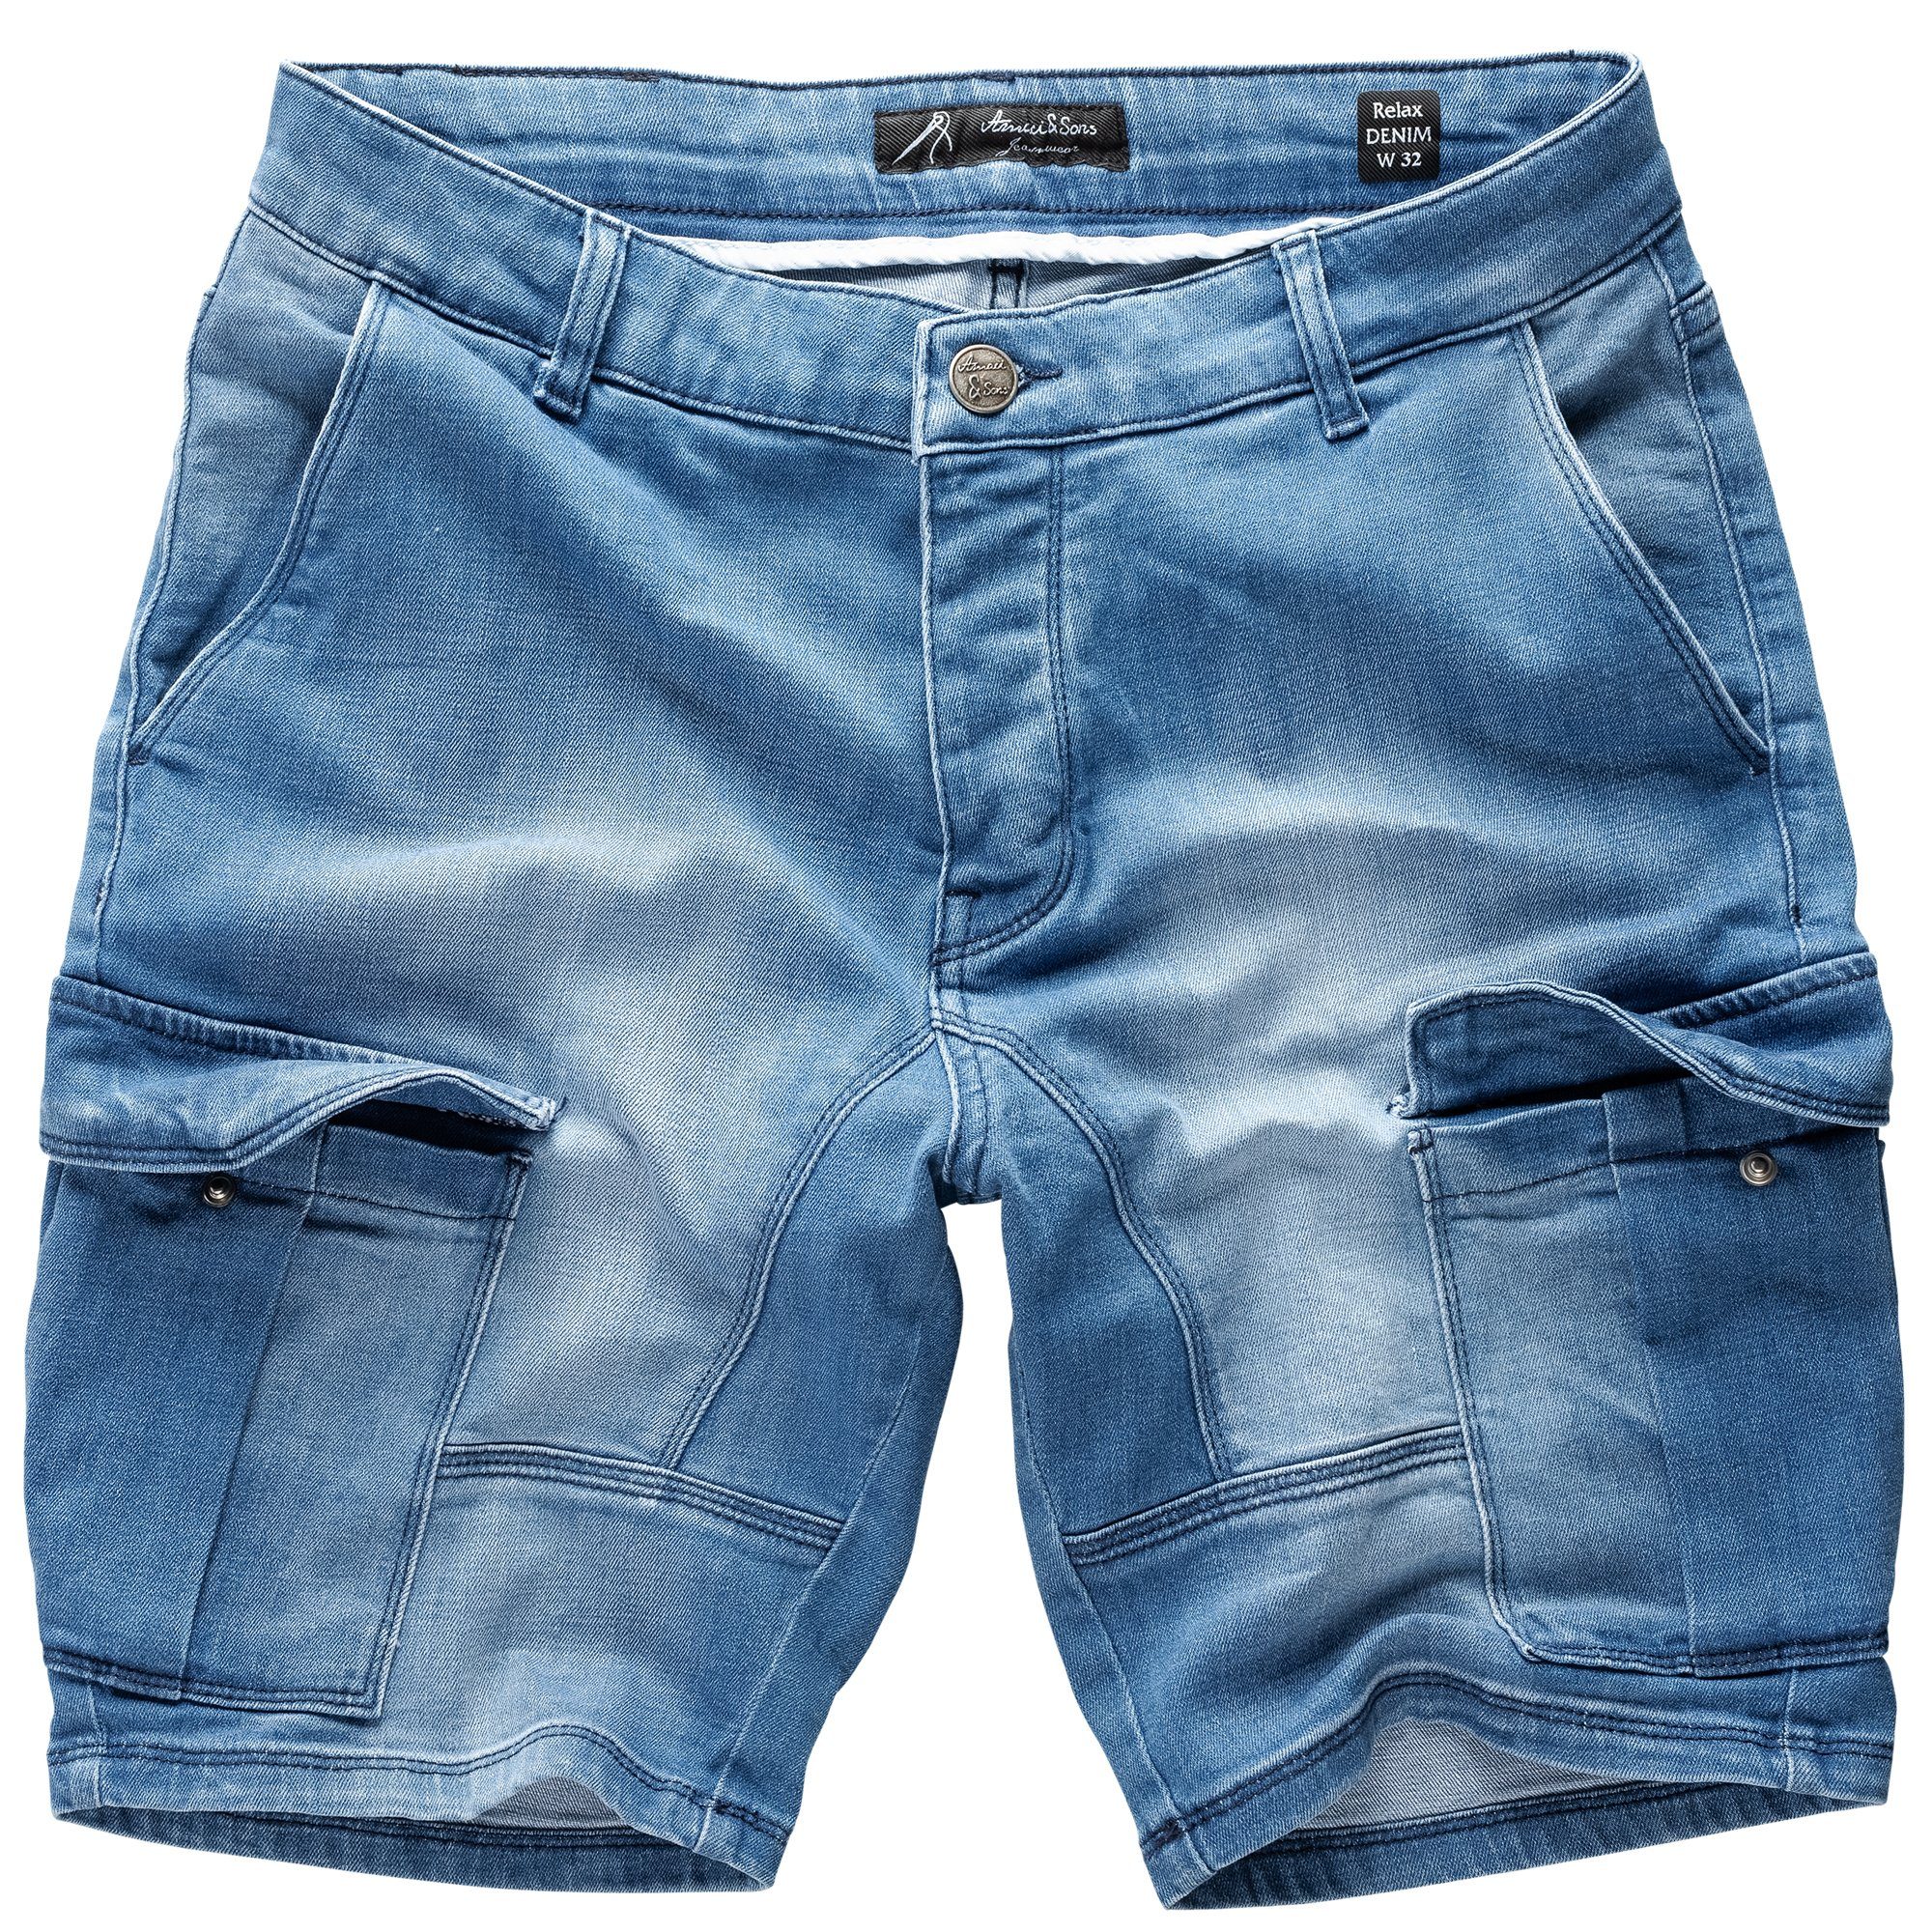 Amaci&Sons Jeansshorts SAN DIEGO Destroyed Jeans Shorts Hellblau (798)